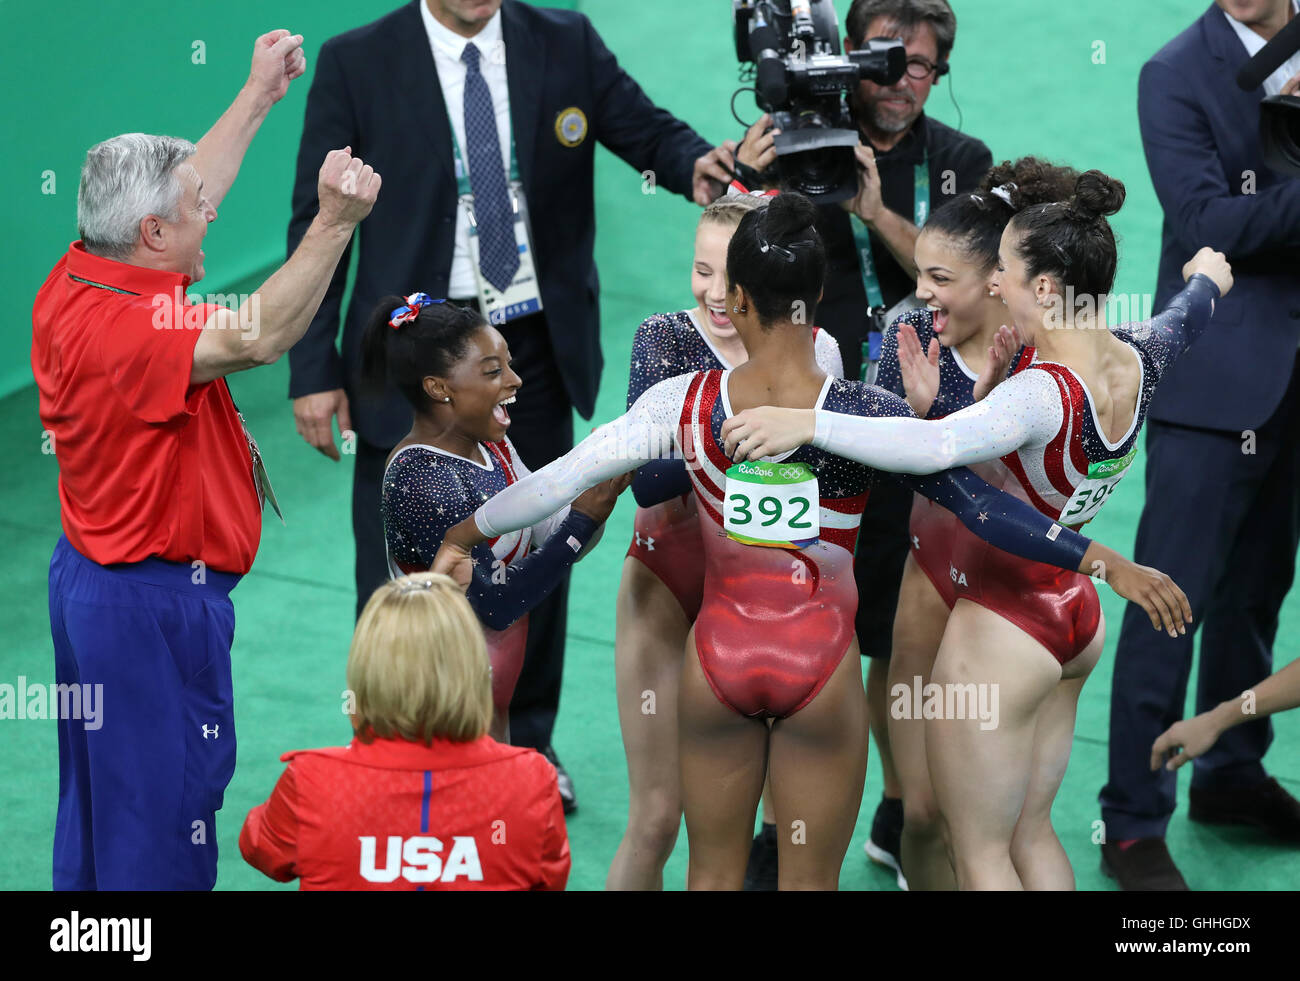 U.S. Women's Gymnastics Team Wins Gold at Olympics 2016